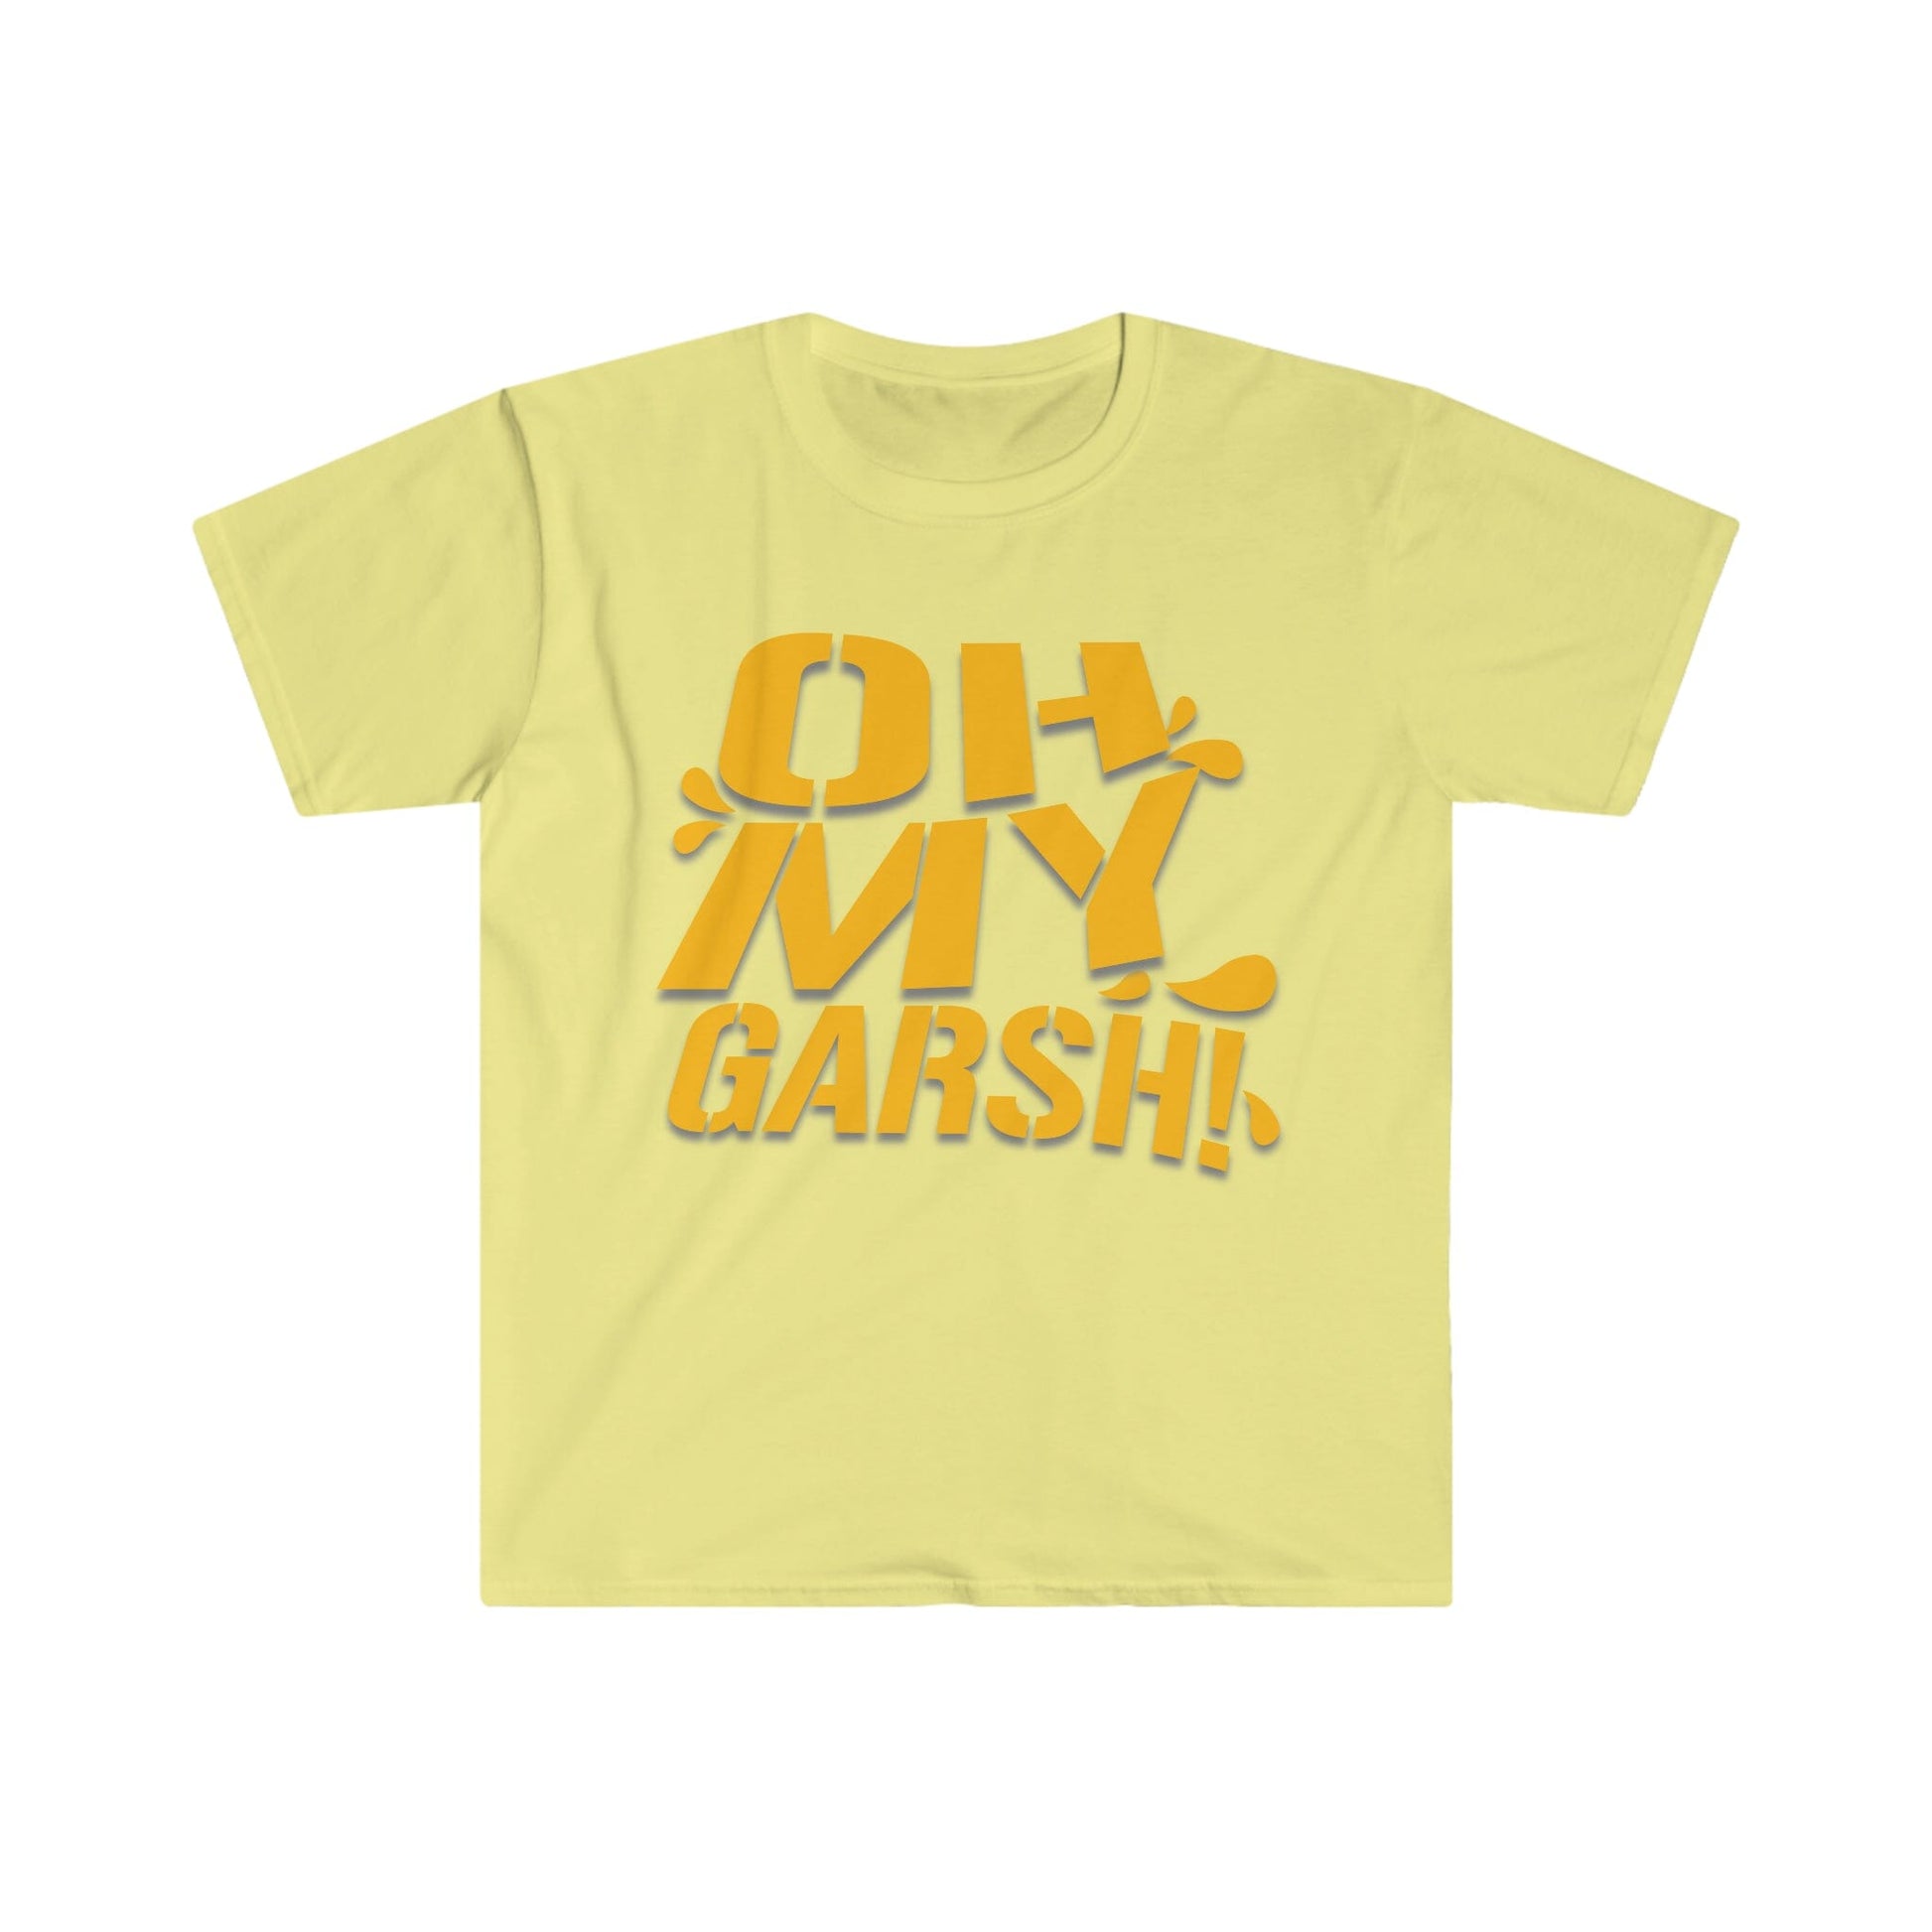 Oh My Garsh T-Shirt T-Shirt Printify Cornsilk S 